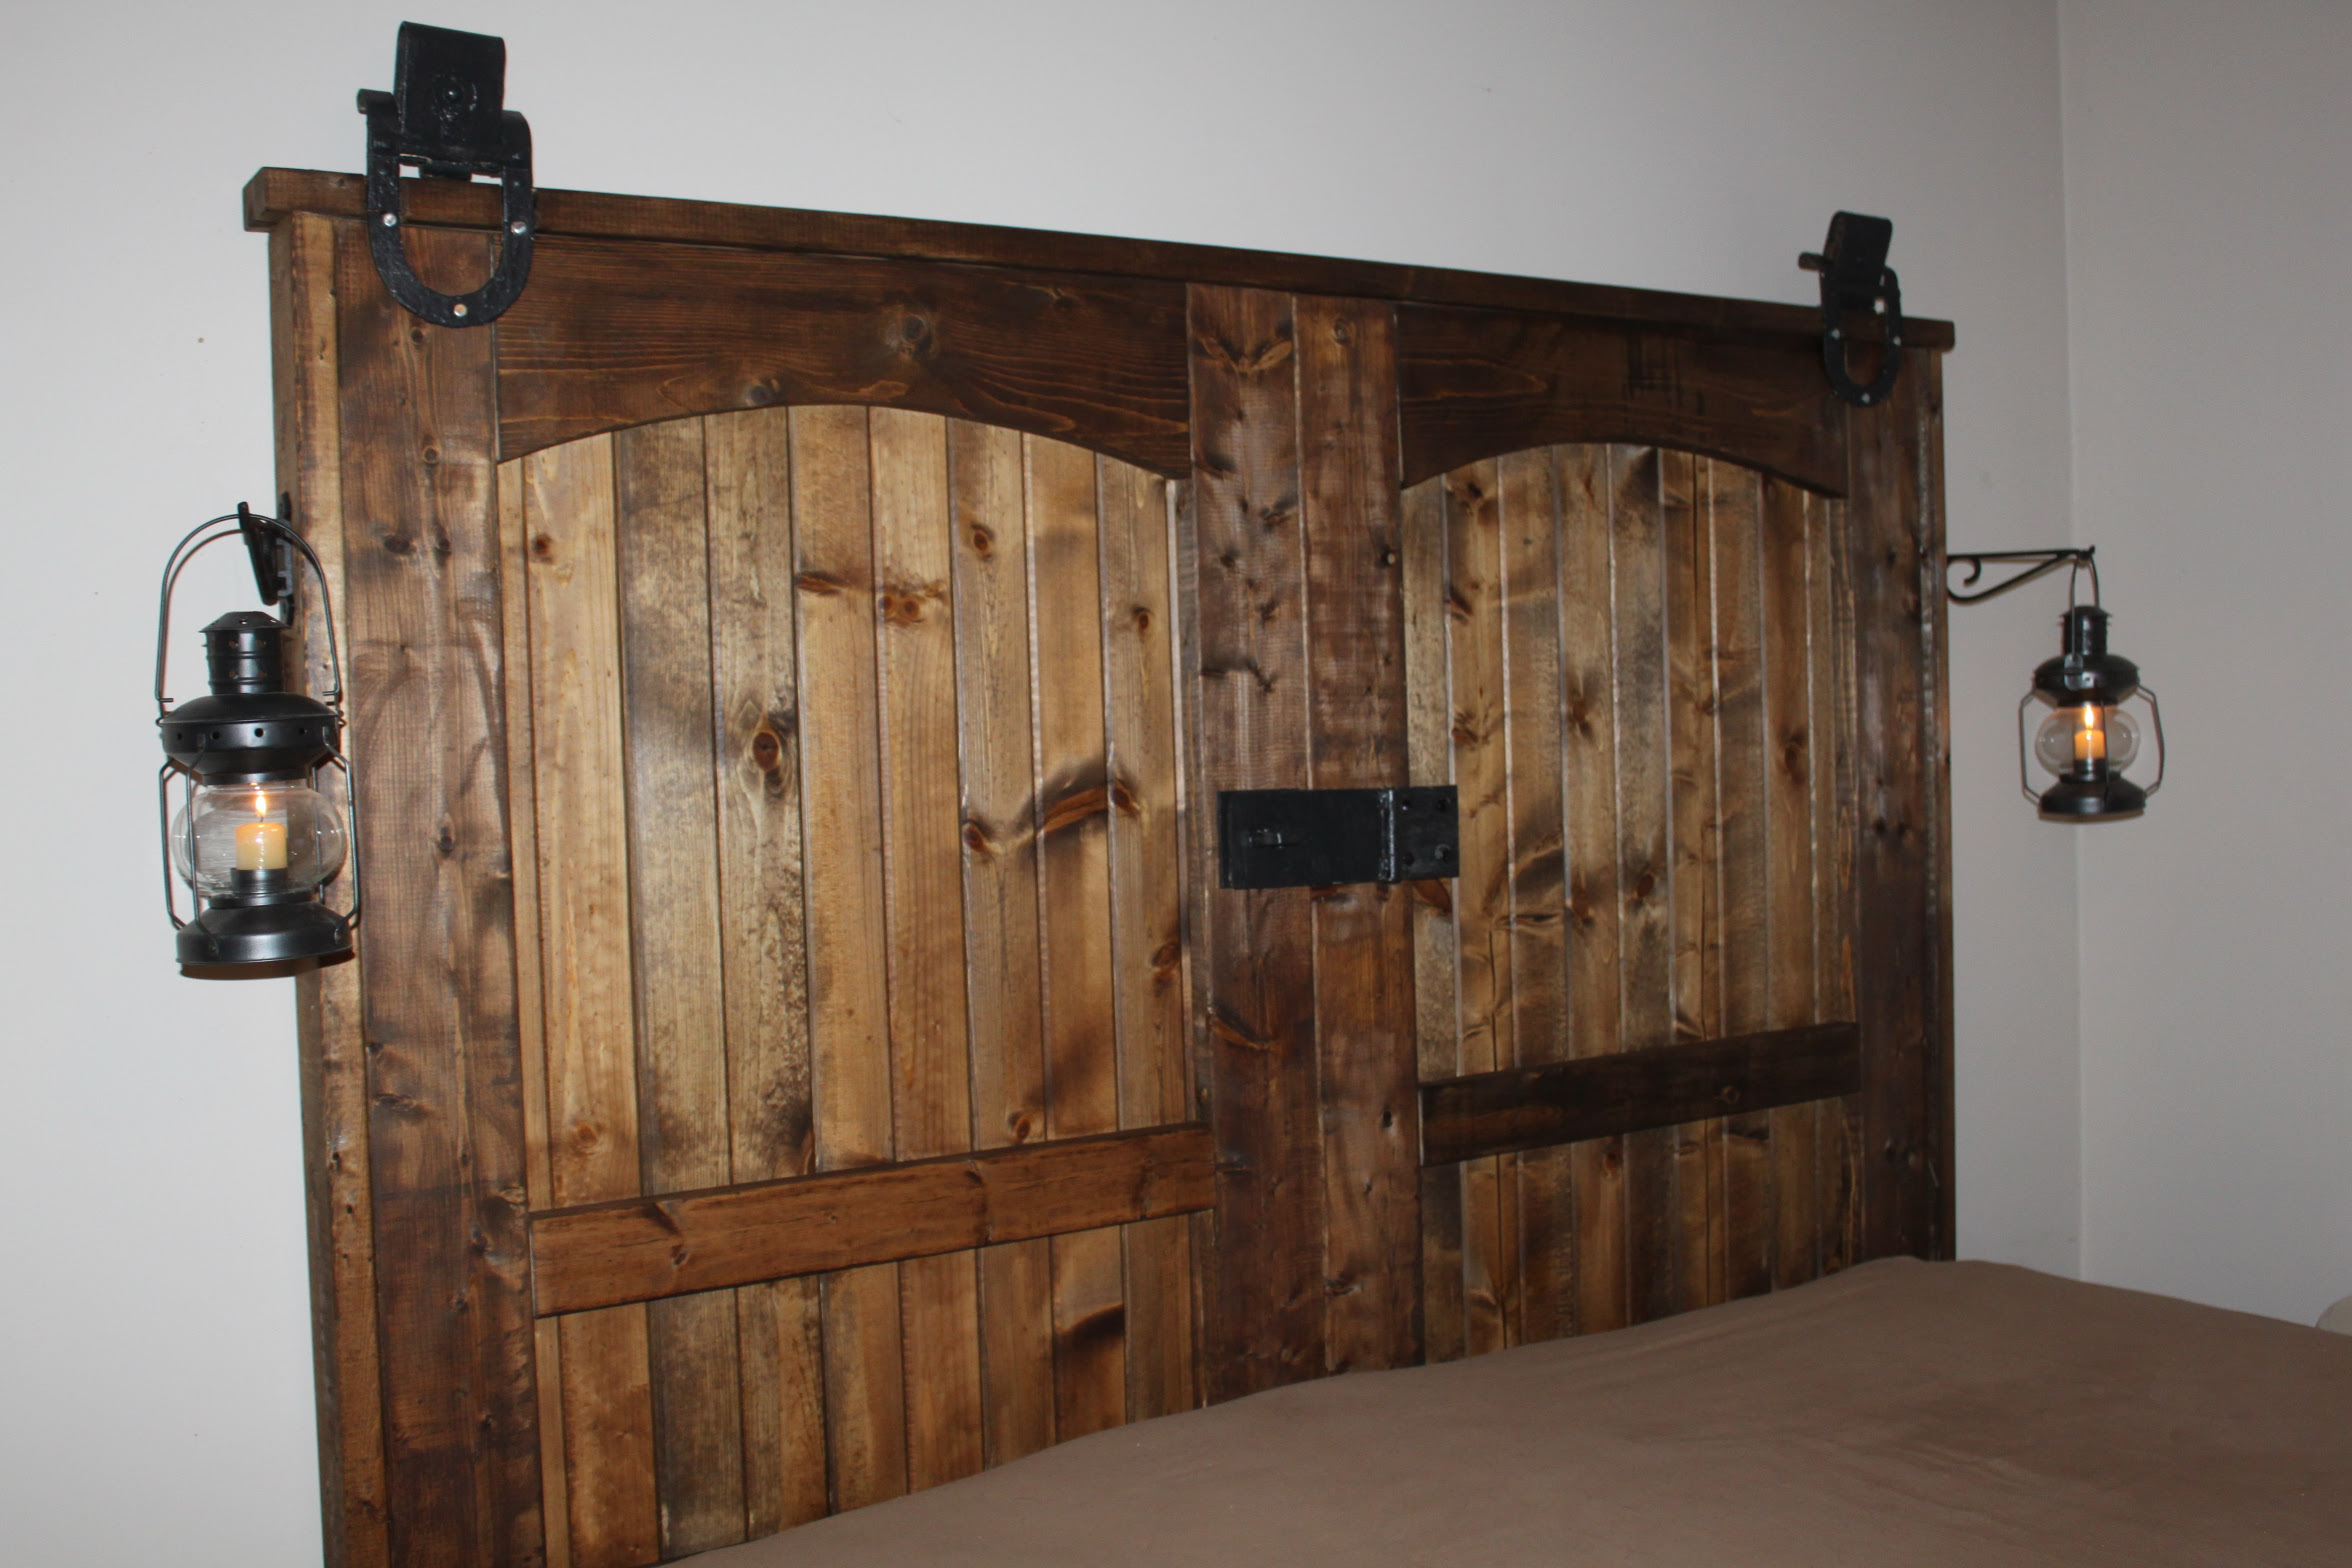 How To Build A Rustic Barn Door Headboard | Old World Garden Farms